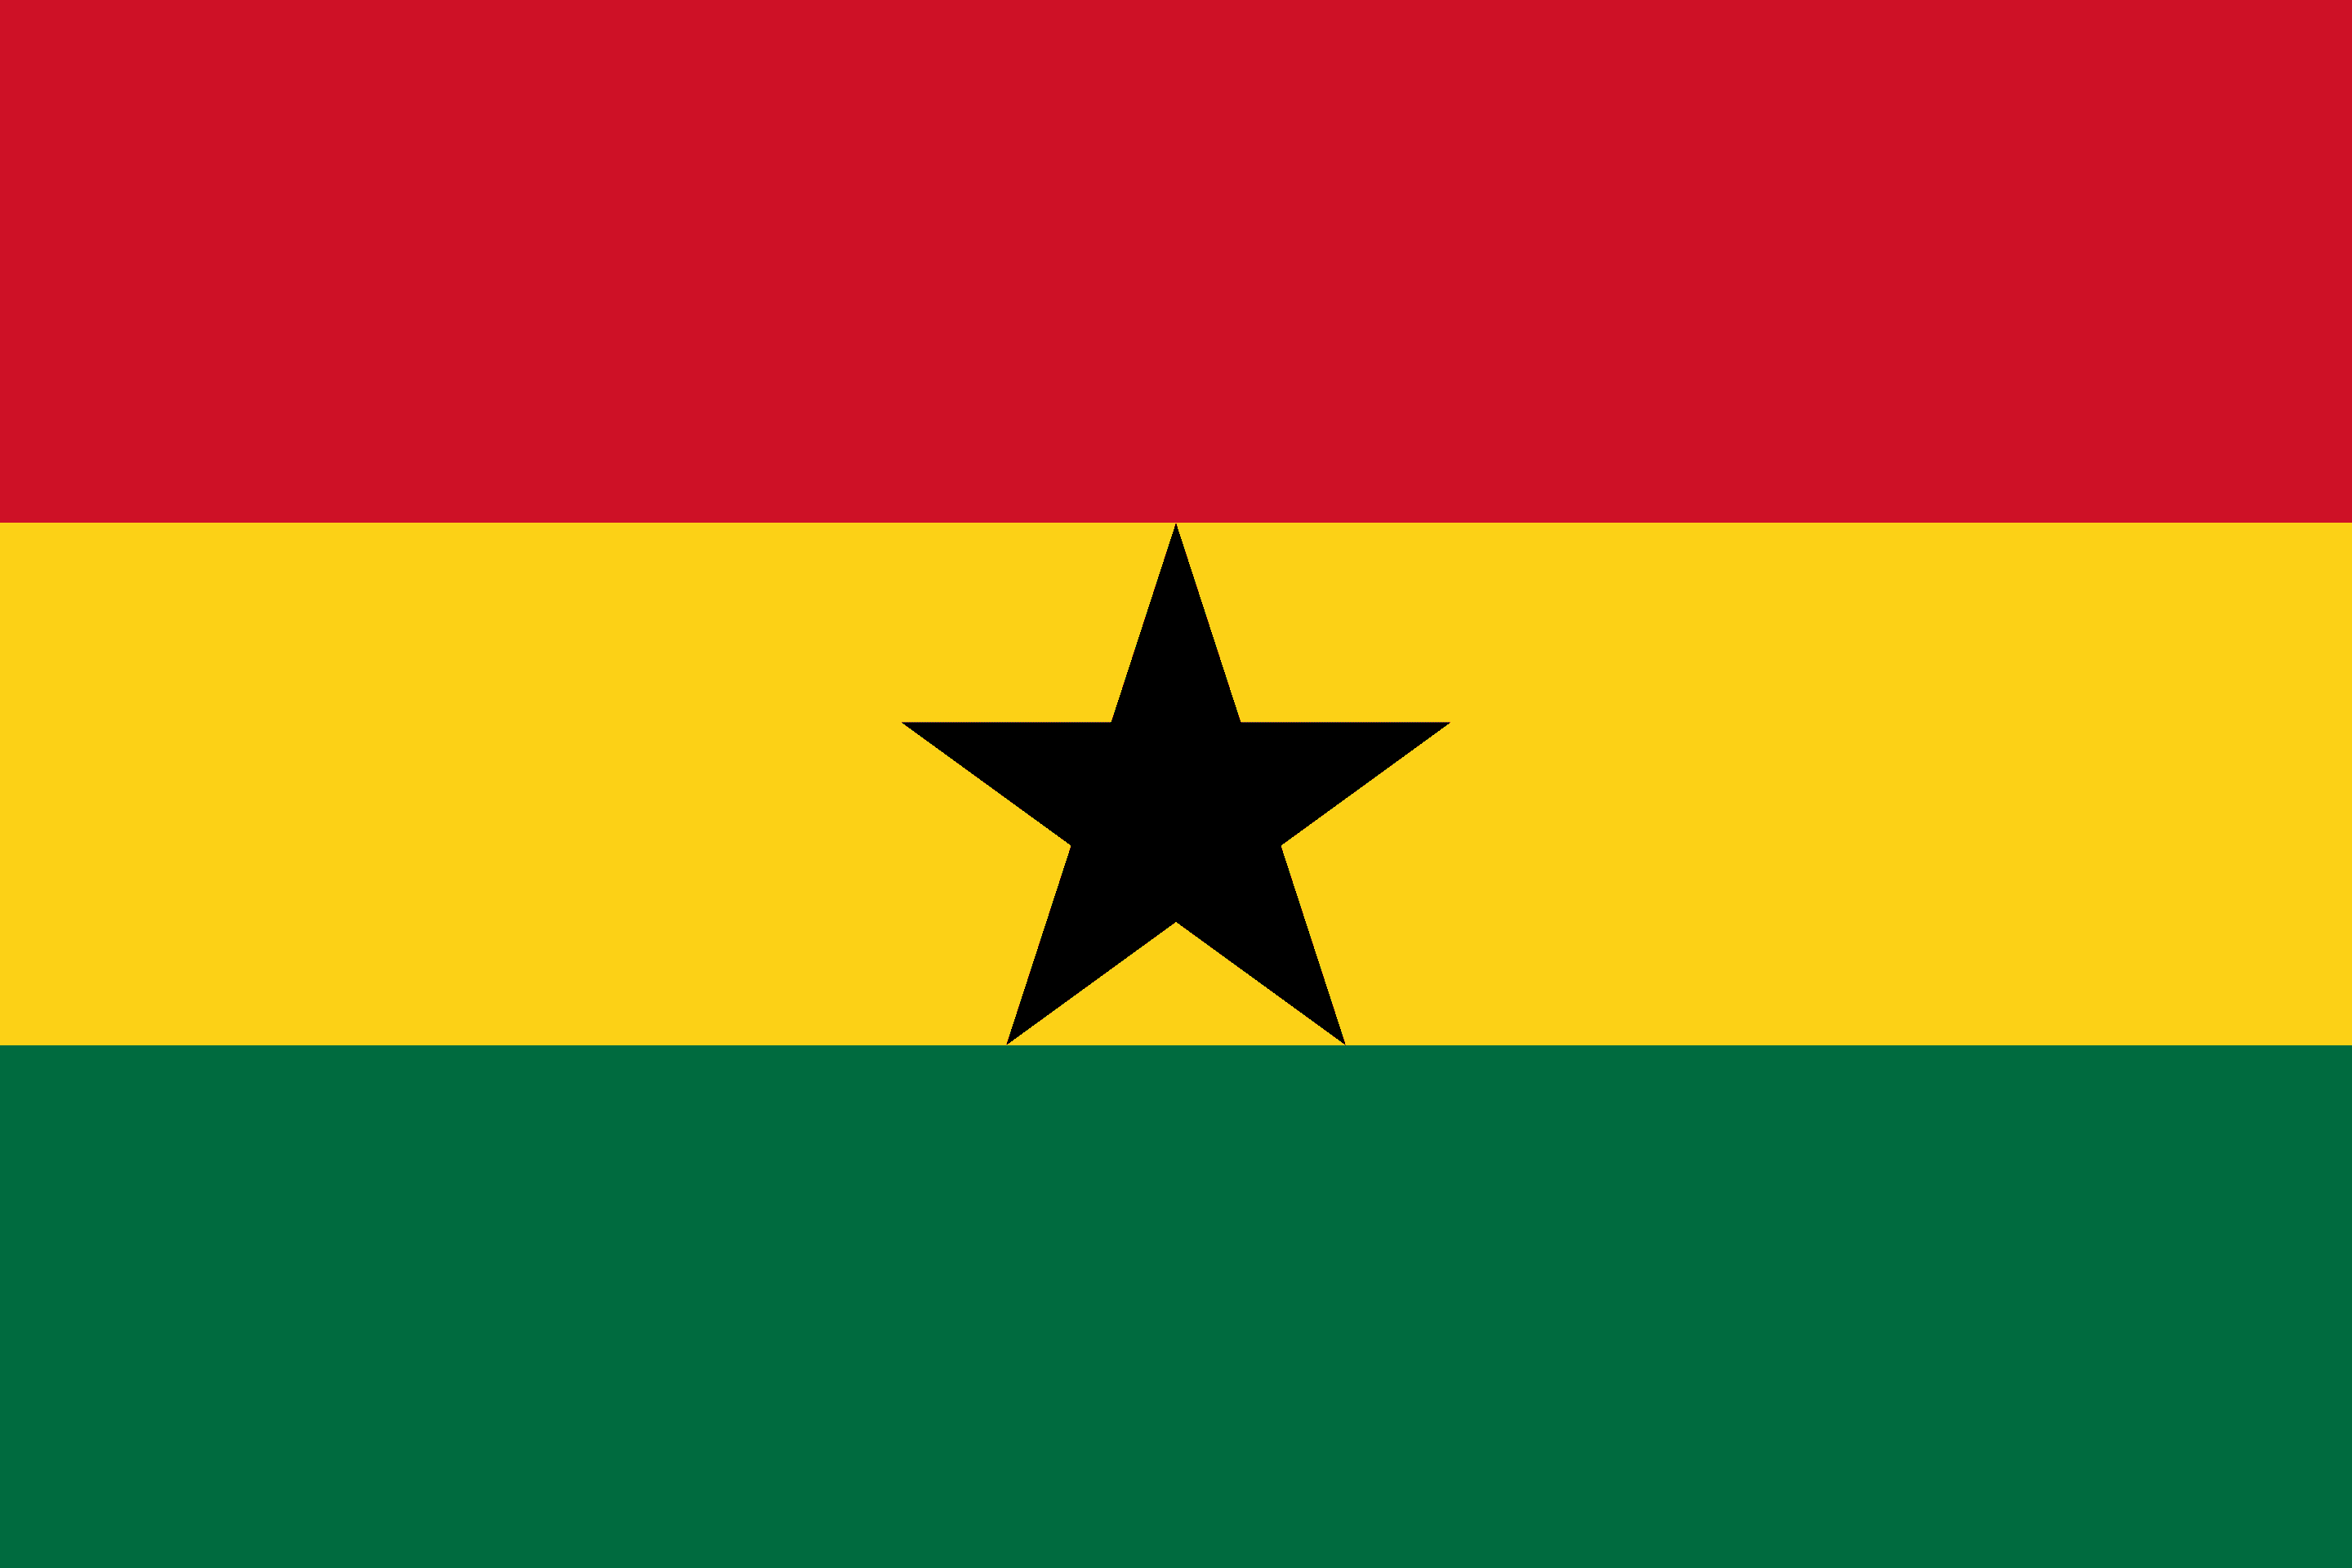 Drone Laws in Ghana